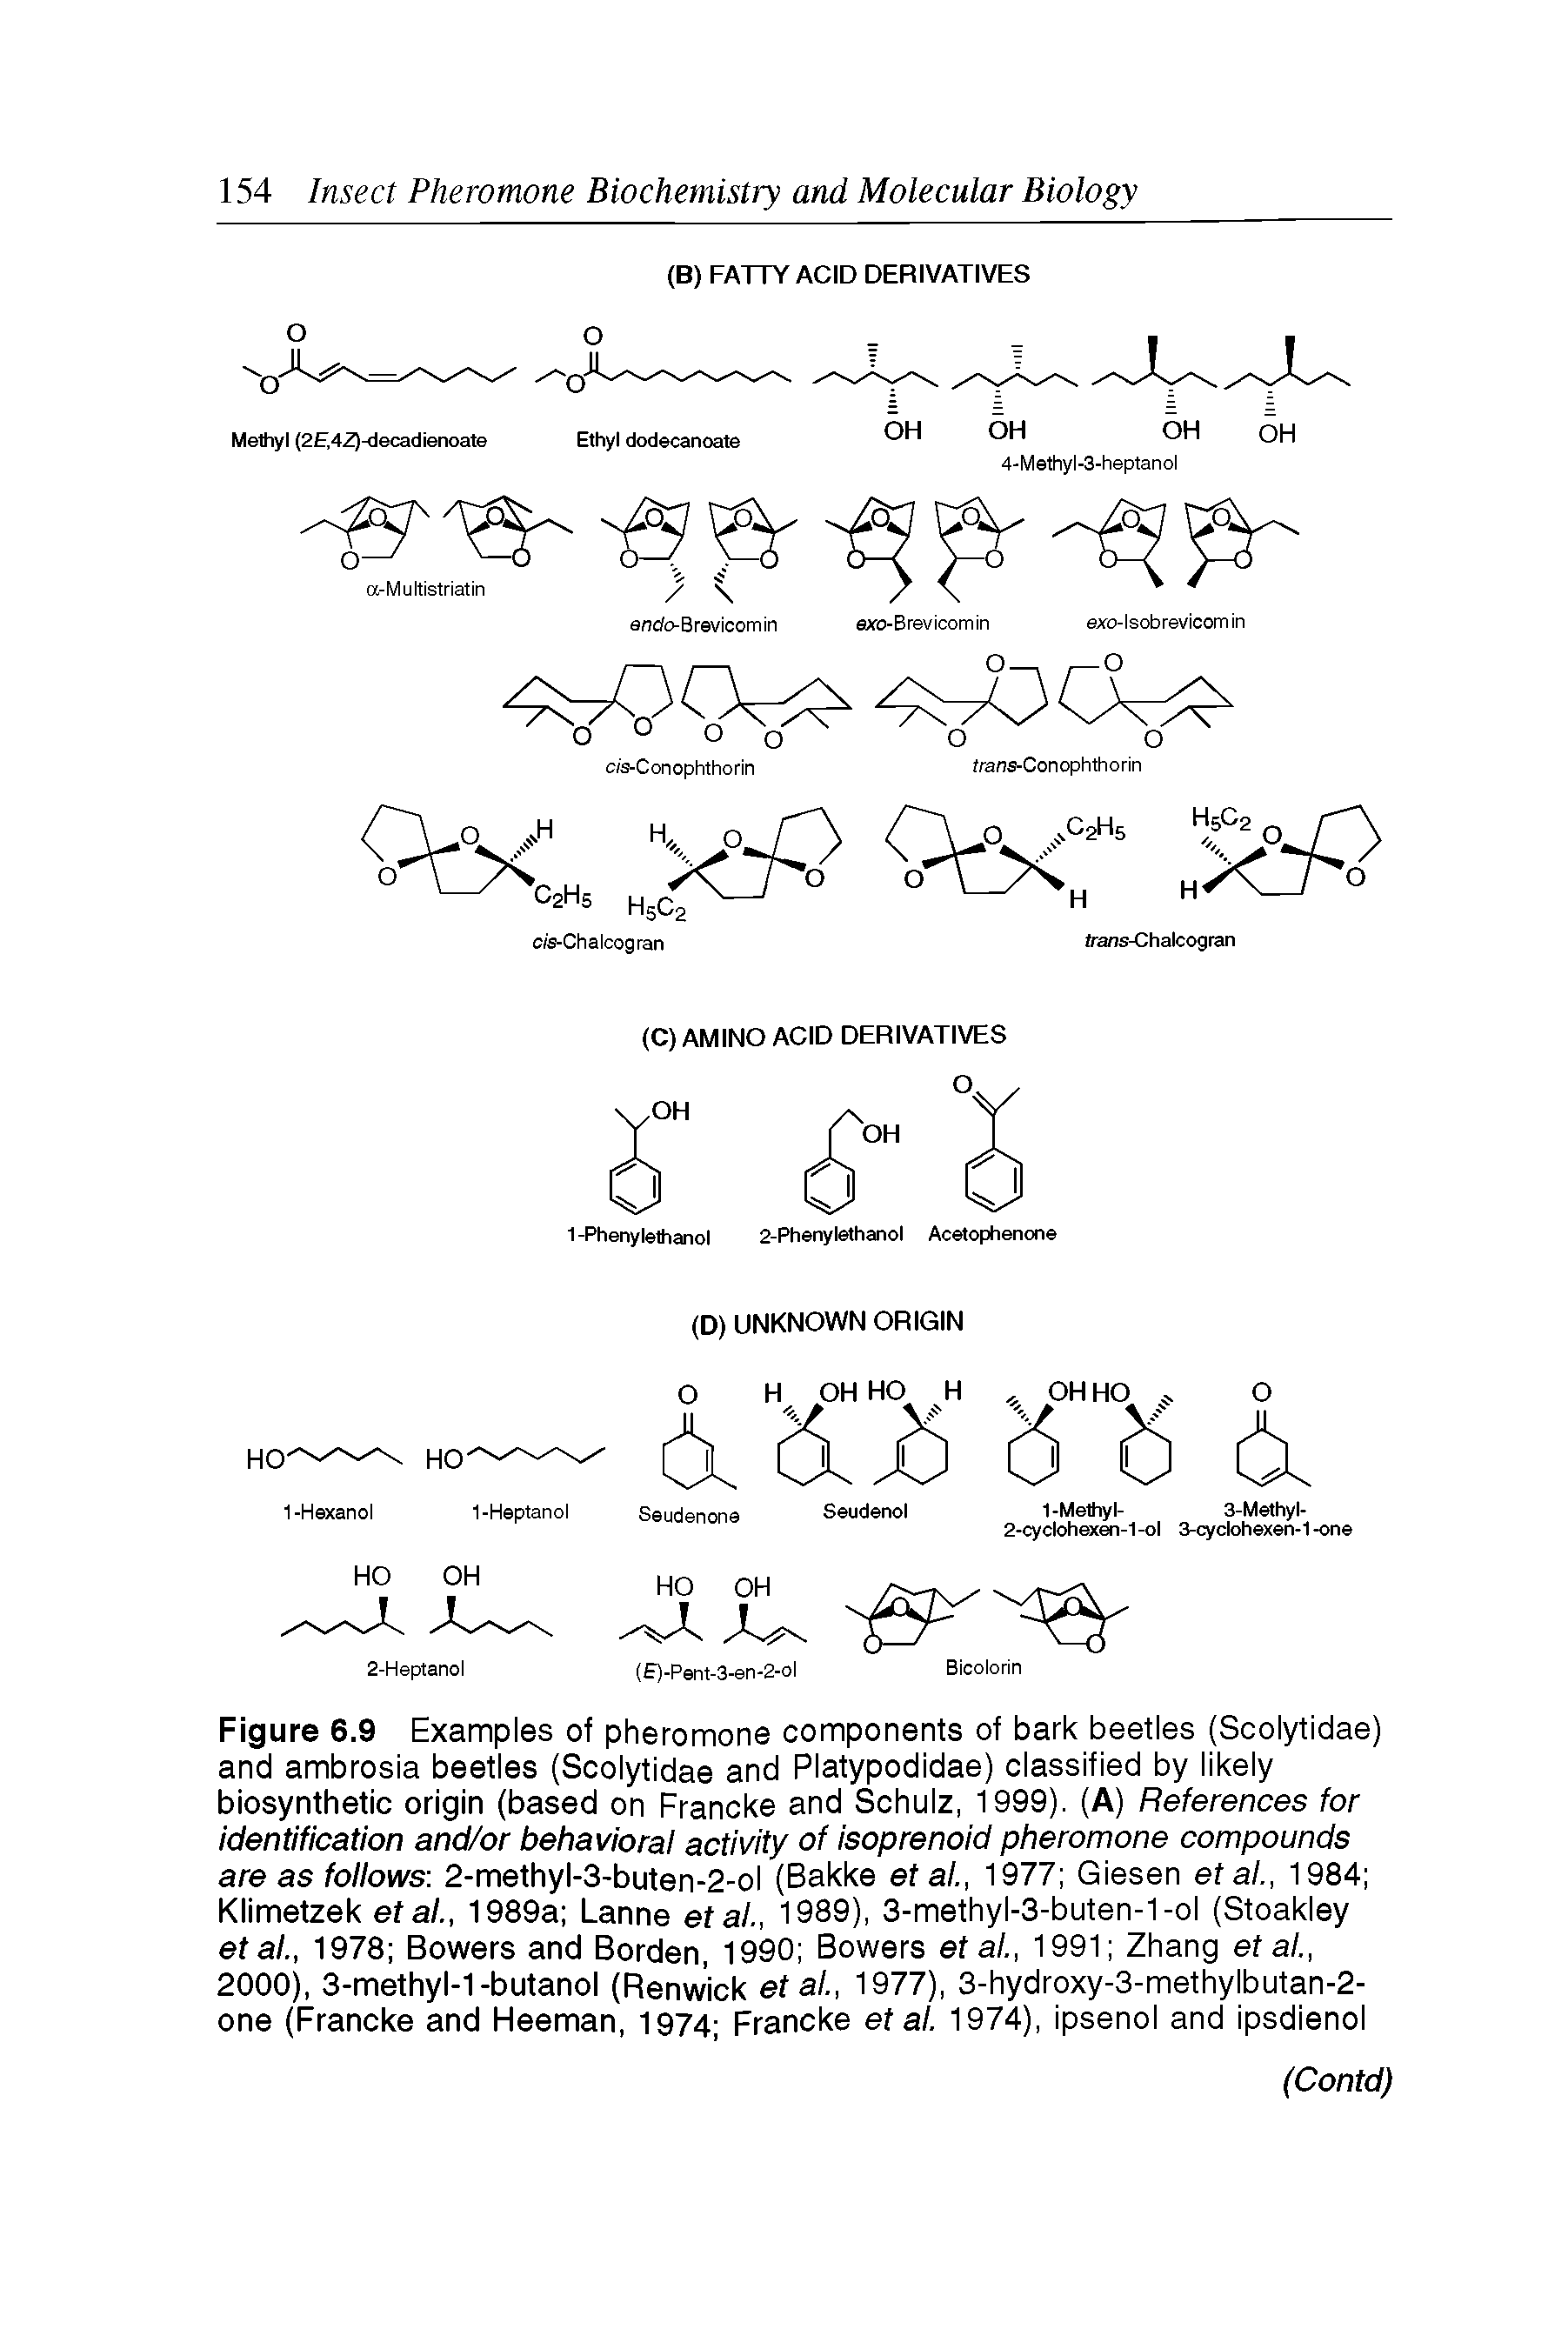 Figure 6.9 Examples of pheromone components of bark beetles (Scolytidae) and ambrosia beetles (Scolytidae and Platypodidae) classified by likely biosynthetic origin (based on Francke and Schulz, 1999). (A) References for identification and/or behavioral activity of isoprenoid pheromone compounds are as follows-. 2-methyl-3-buten-2-ol (Bakke efa/., 1977 Giesen etal., 1984 Klimetzek etal., 1989a Lanne etal., 1989), 3-methyl-3-buten-1-ol (Stoakley etal., 1978 Bowers and Borden, 1990 Bowers etal, 1991 Zhang efa/., 2000), 3-methyl-1-butanol (Renw ick etal, 1977), 3-hydroxy-3-methylbutan-2-one (Francke and Heeman, 1974 Francke etal 1974), ipsenol and ipsdienol...